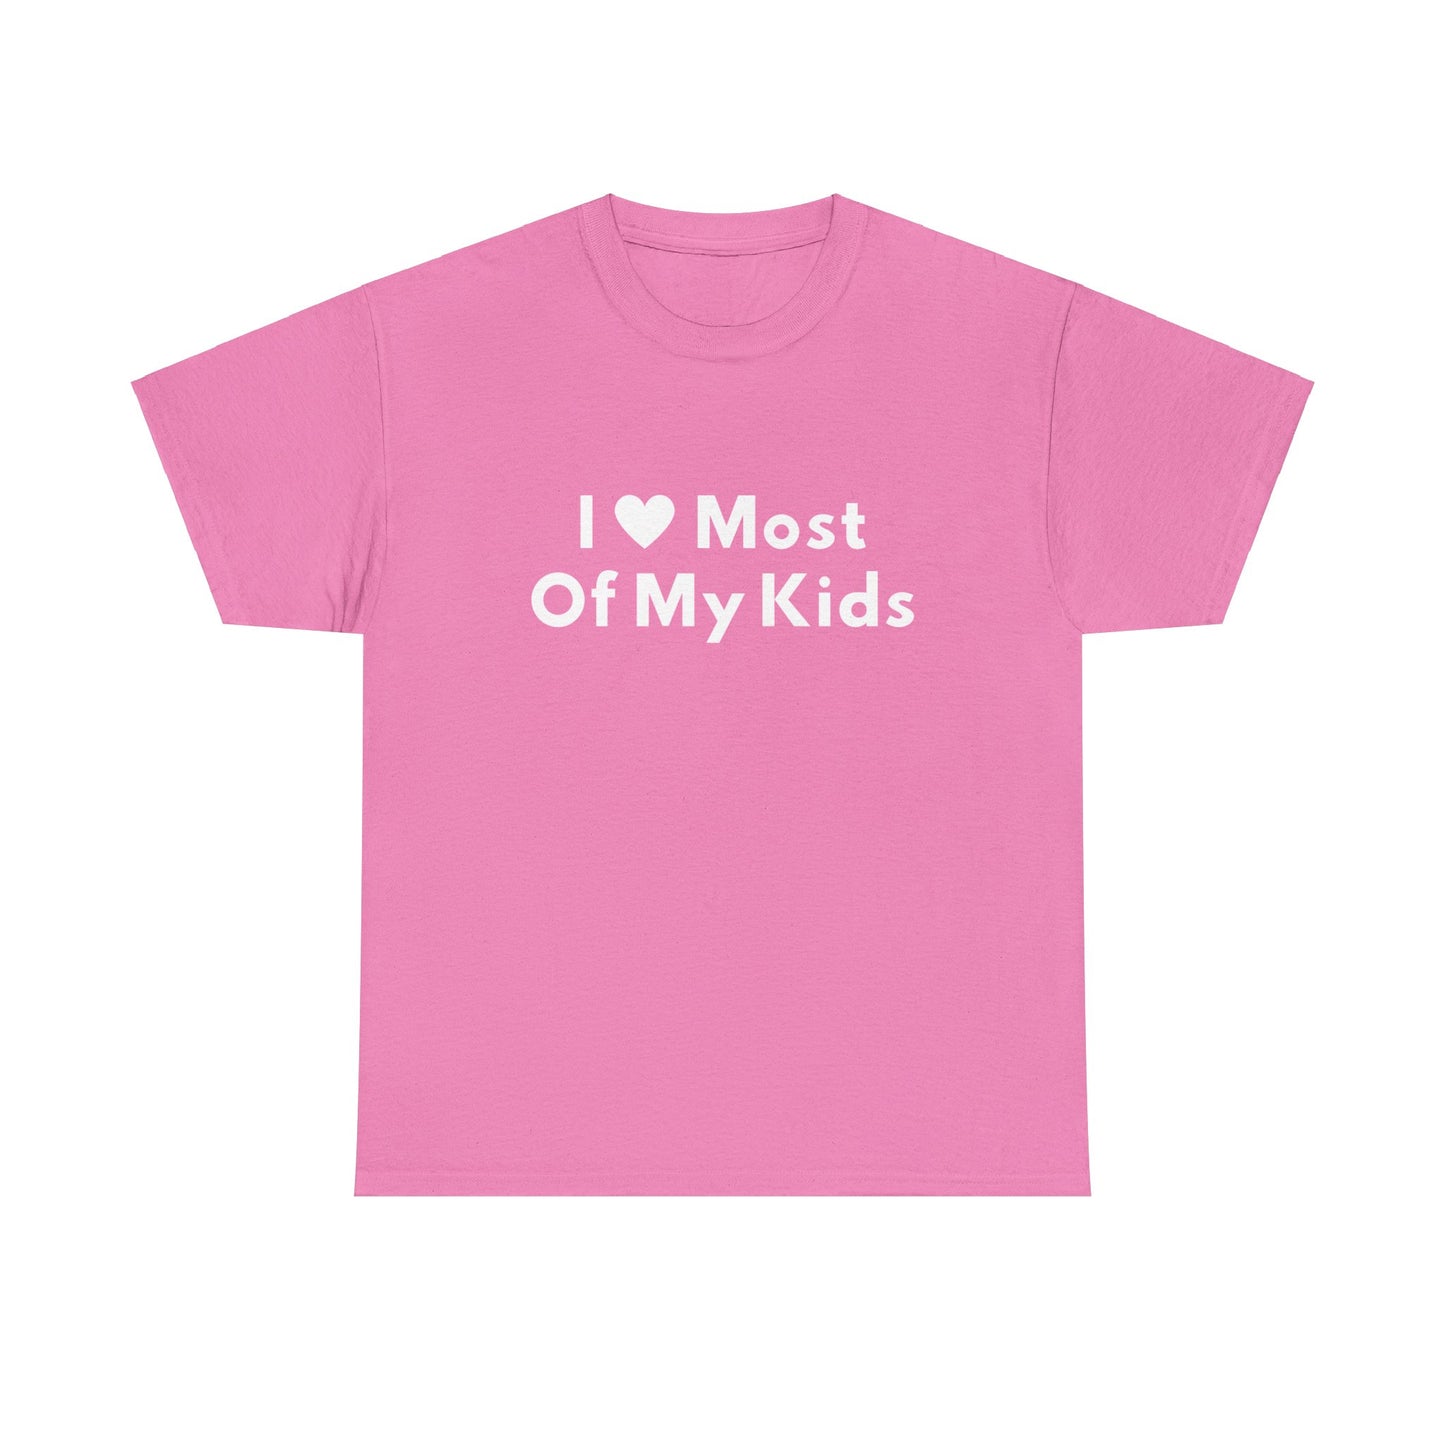 "I <3 Most Of My Kids" Shirt